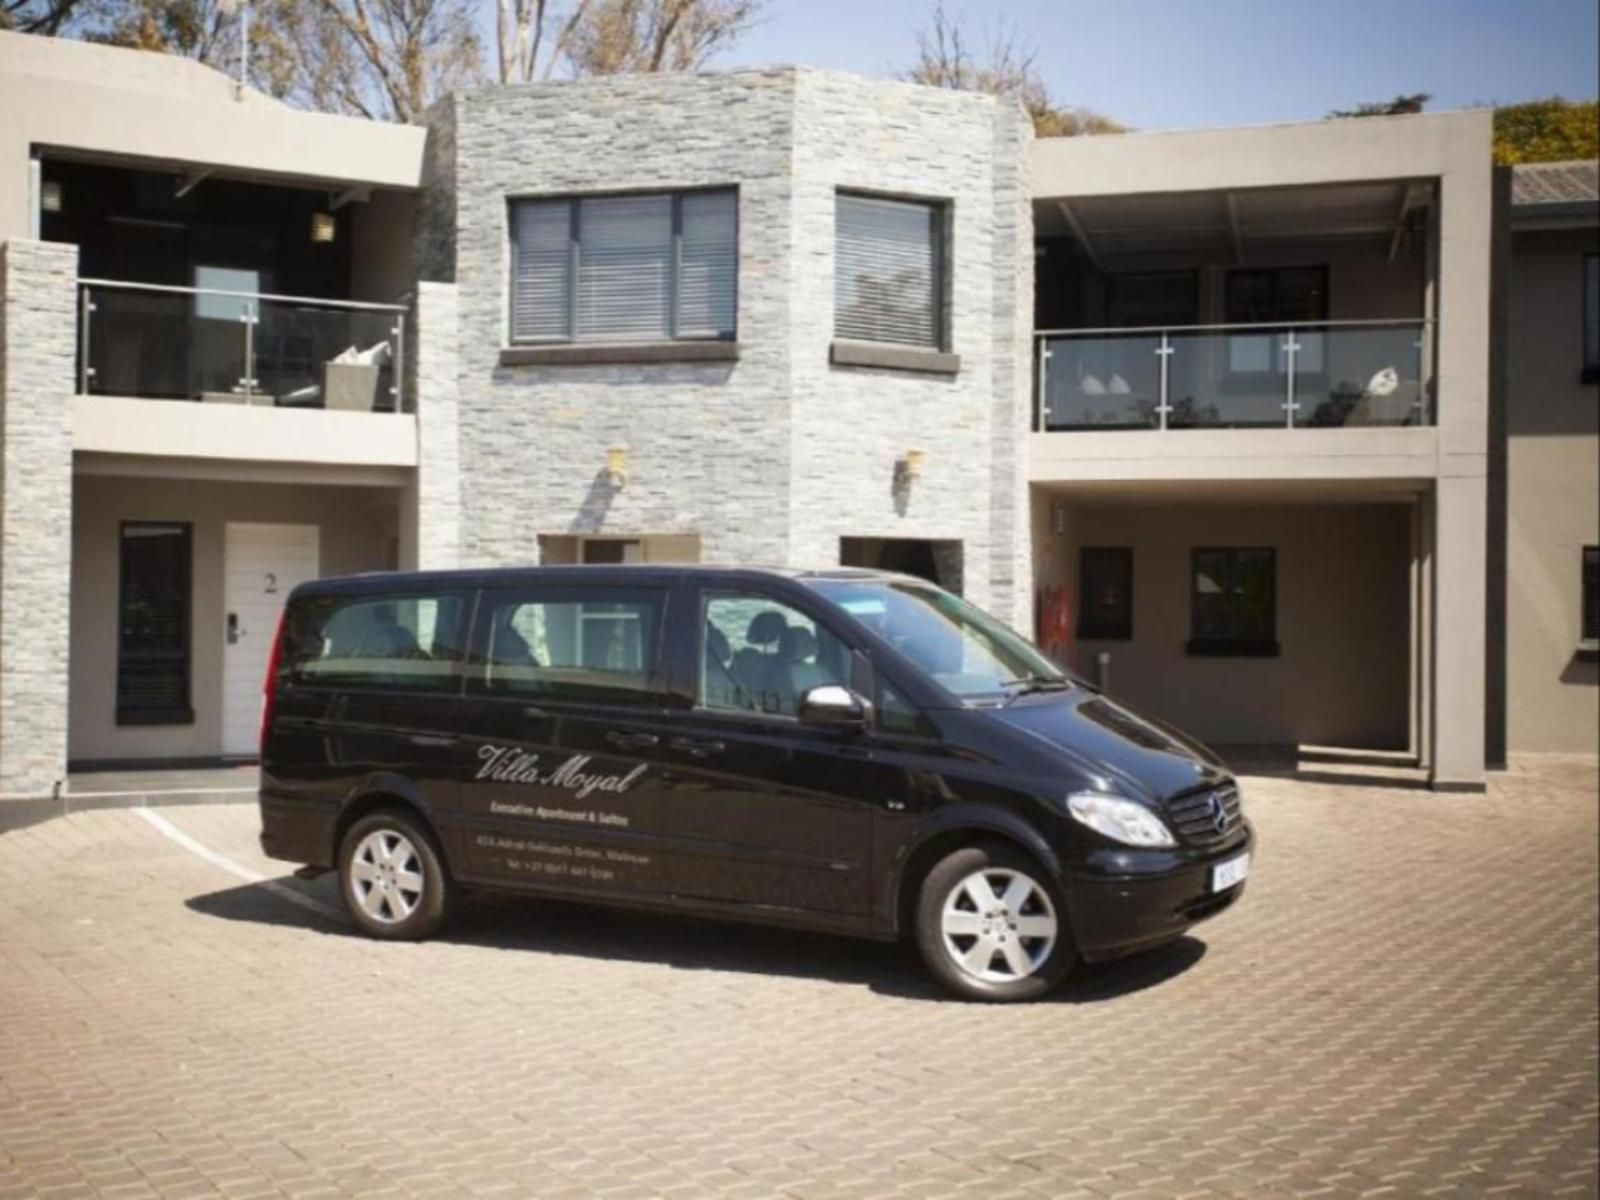 Villa Moyal Executive Apartment And Suites Melrose Johannesburg Gauteng South Africa Car, Vehicle, House, Building, Architecture, Window